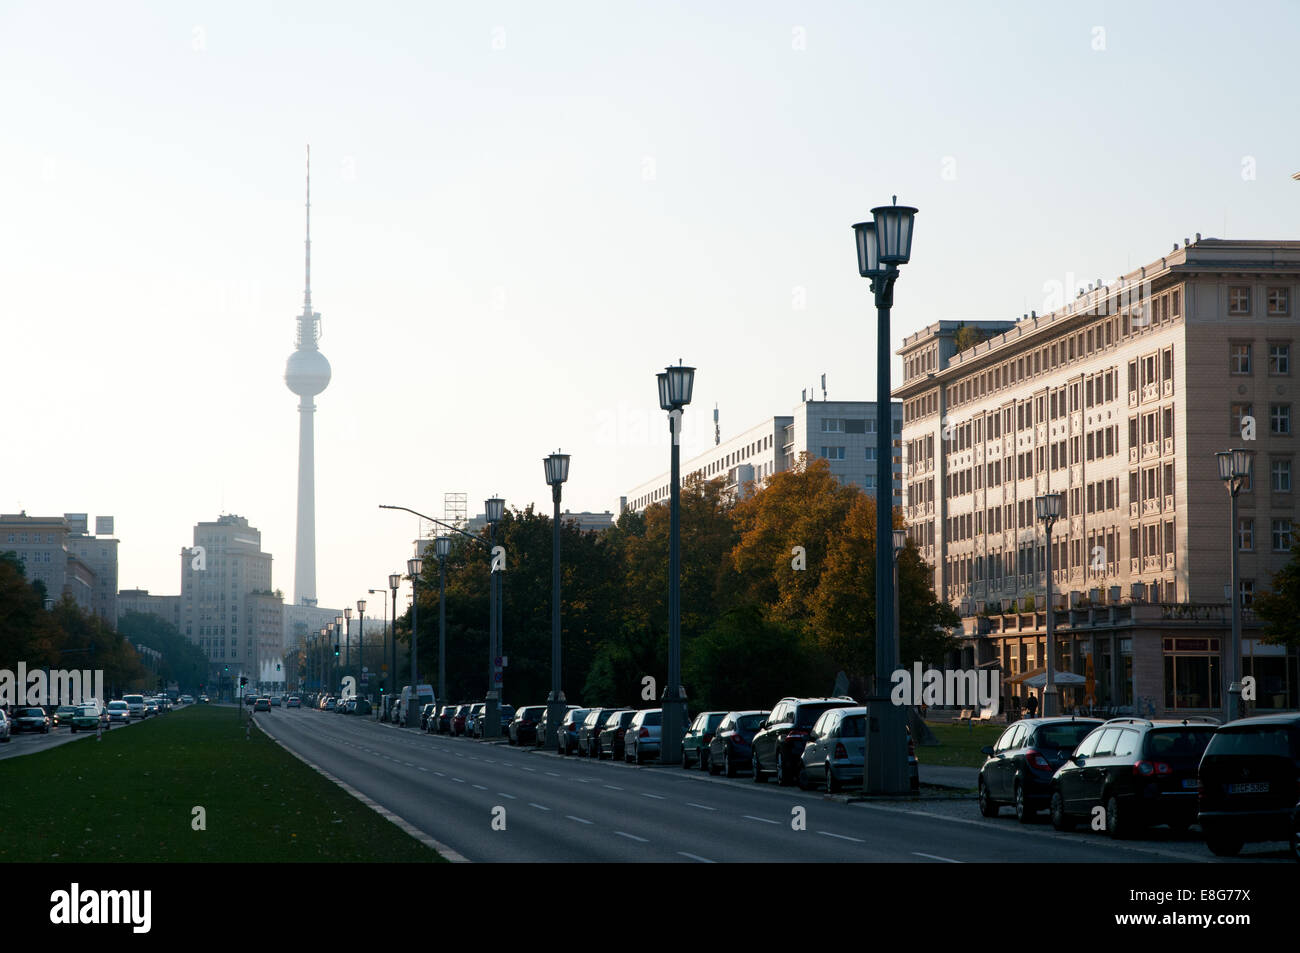 Karl Marx Allee socialist boulevard, eastern Berlin Stock Photo